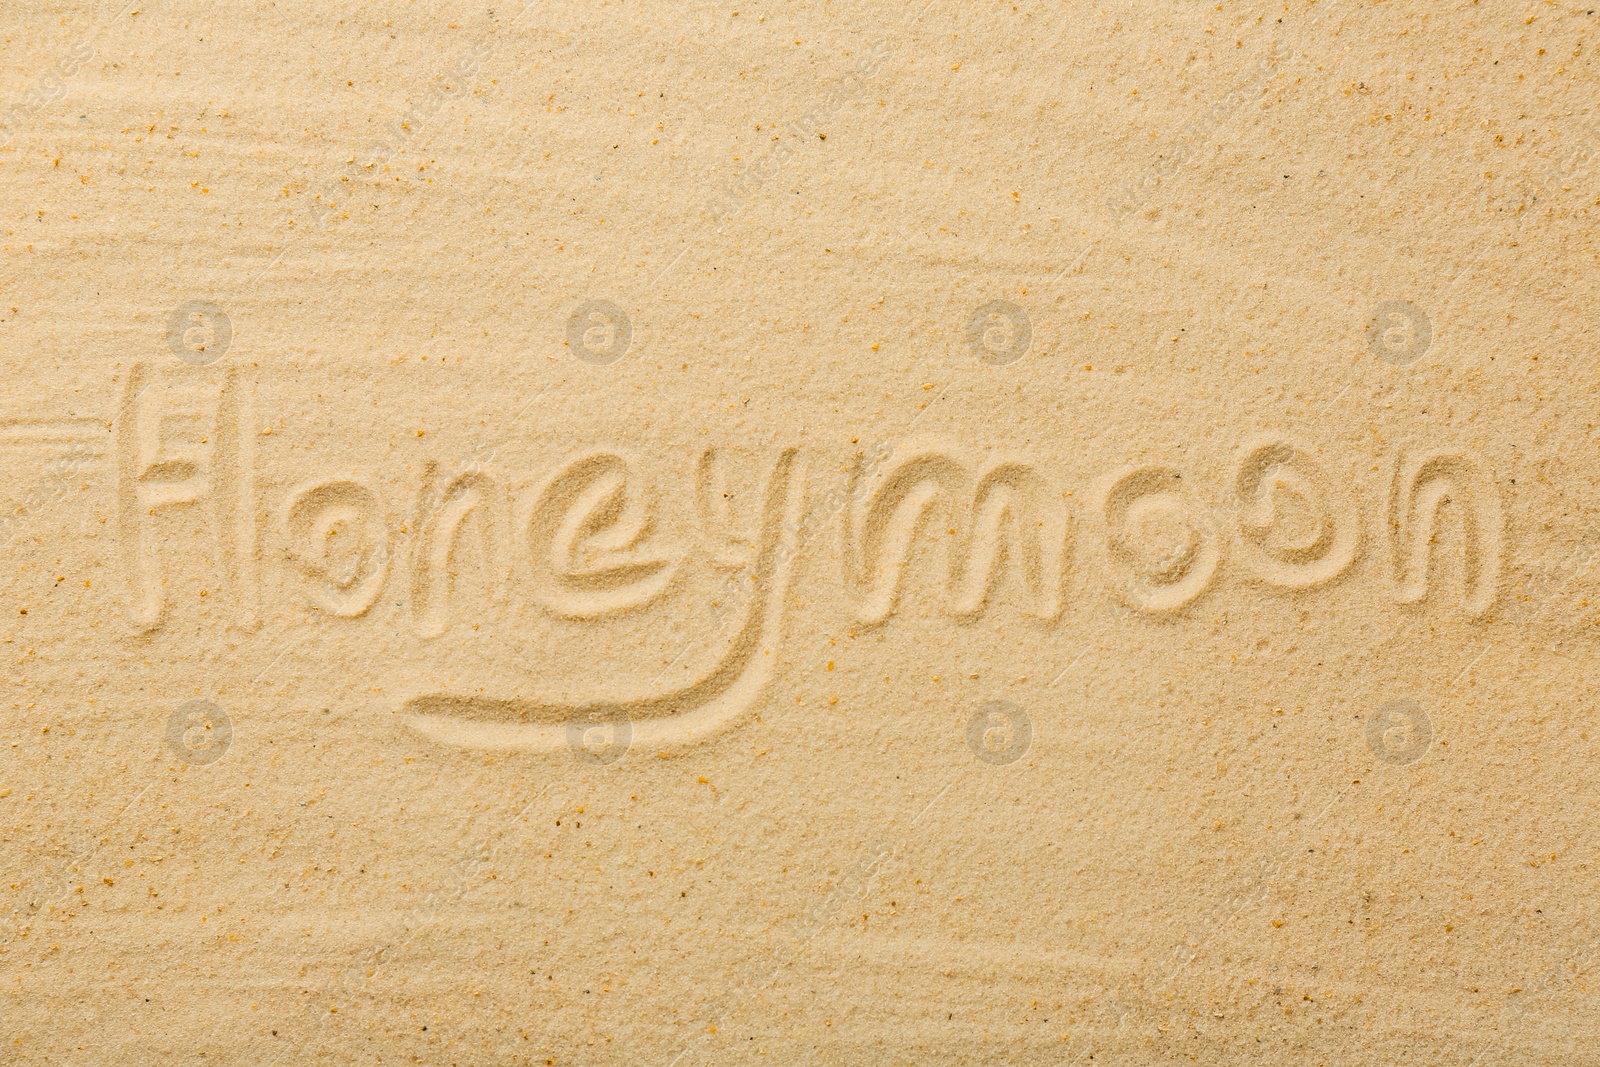 Photo of Word Honeymoon written on sand, top view